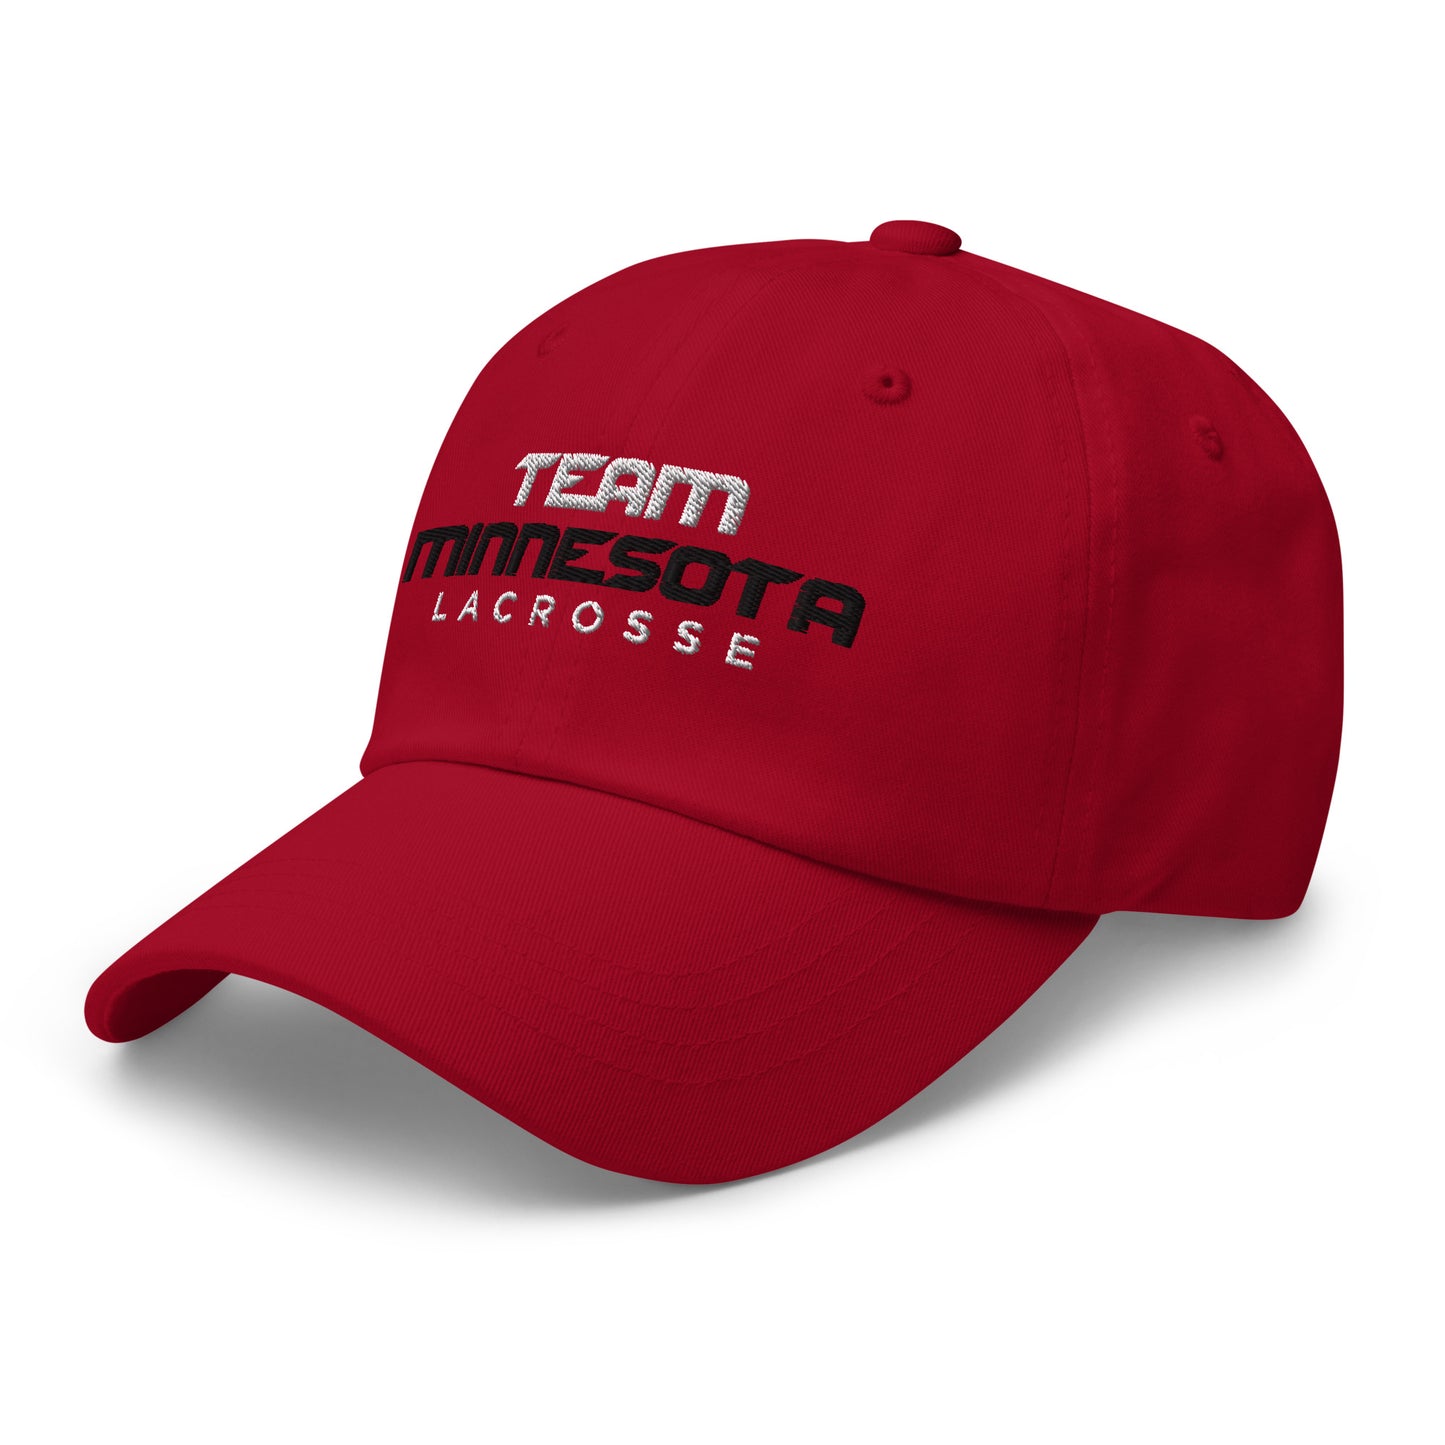 Team Minnesota - Dad hat